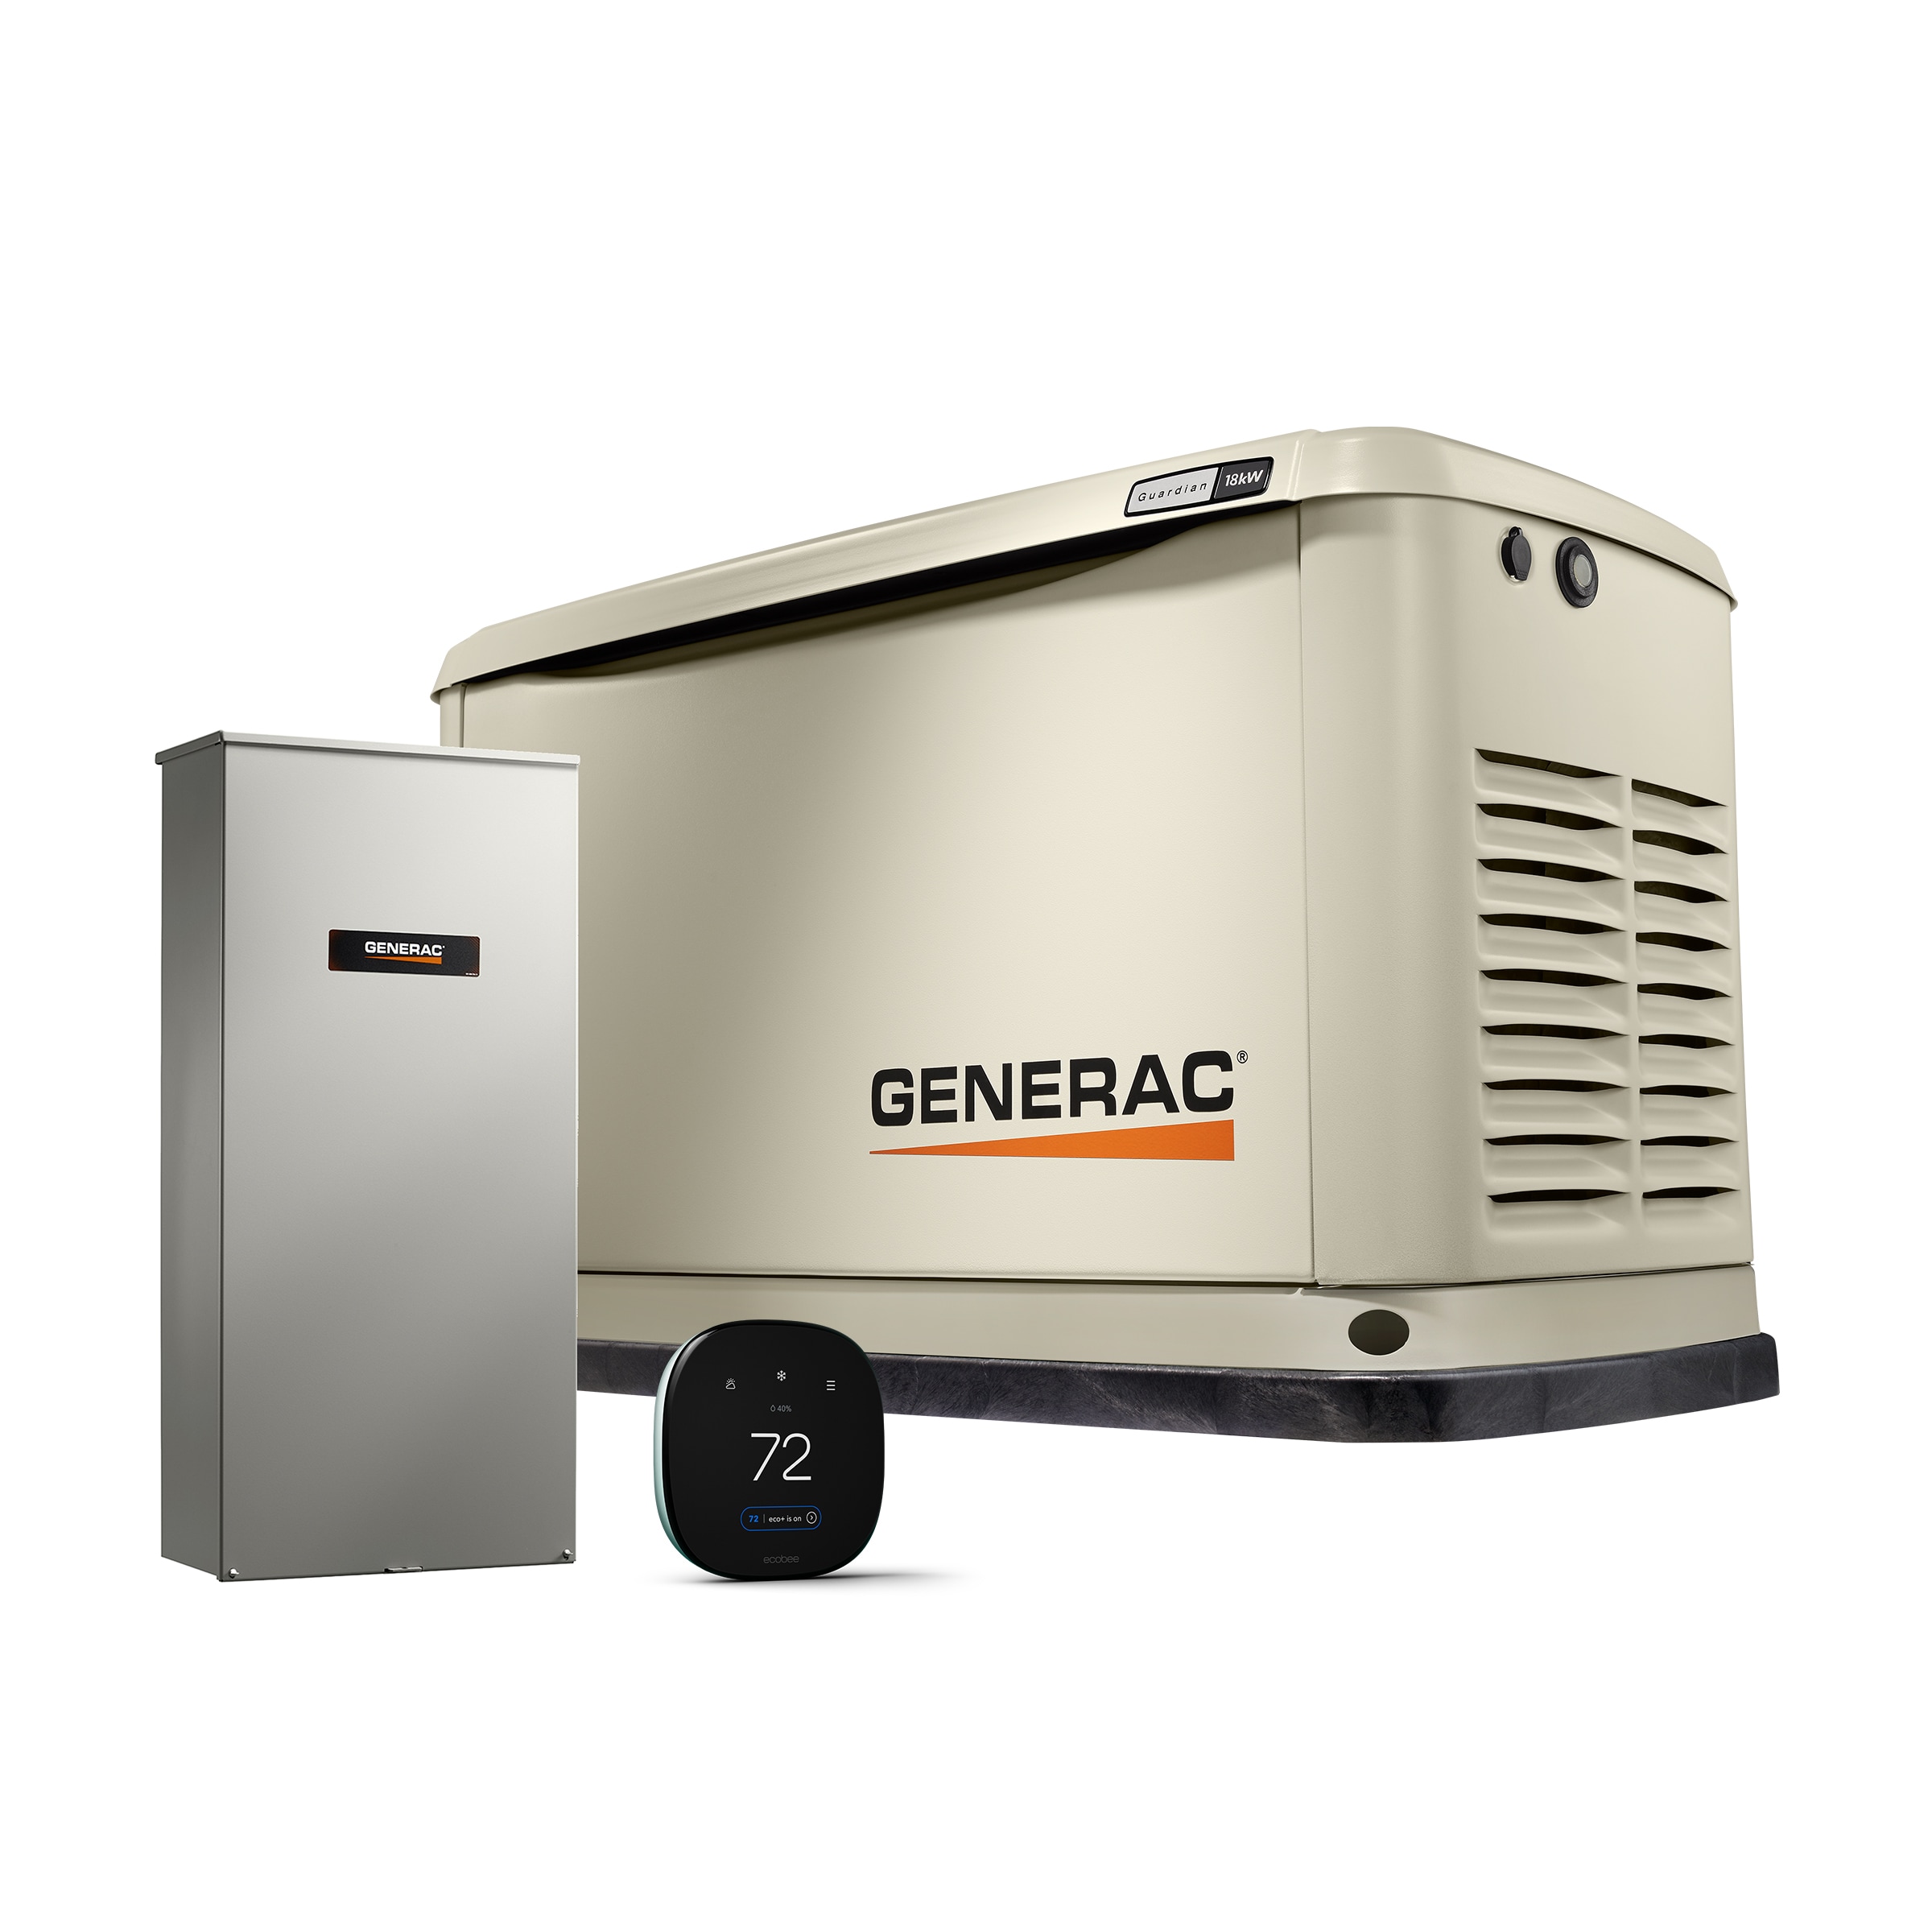 Generac 18kW Home Standby Generator + ecobee Smart Thermostat Enhanced Bundle